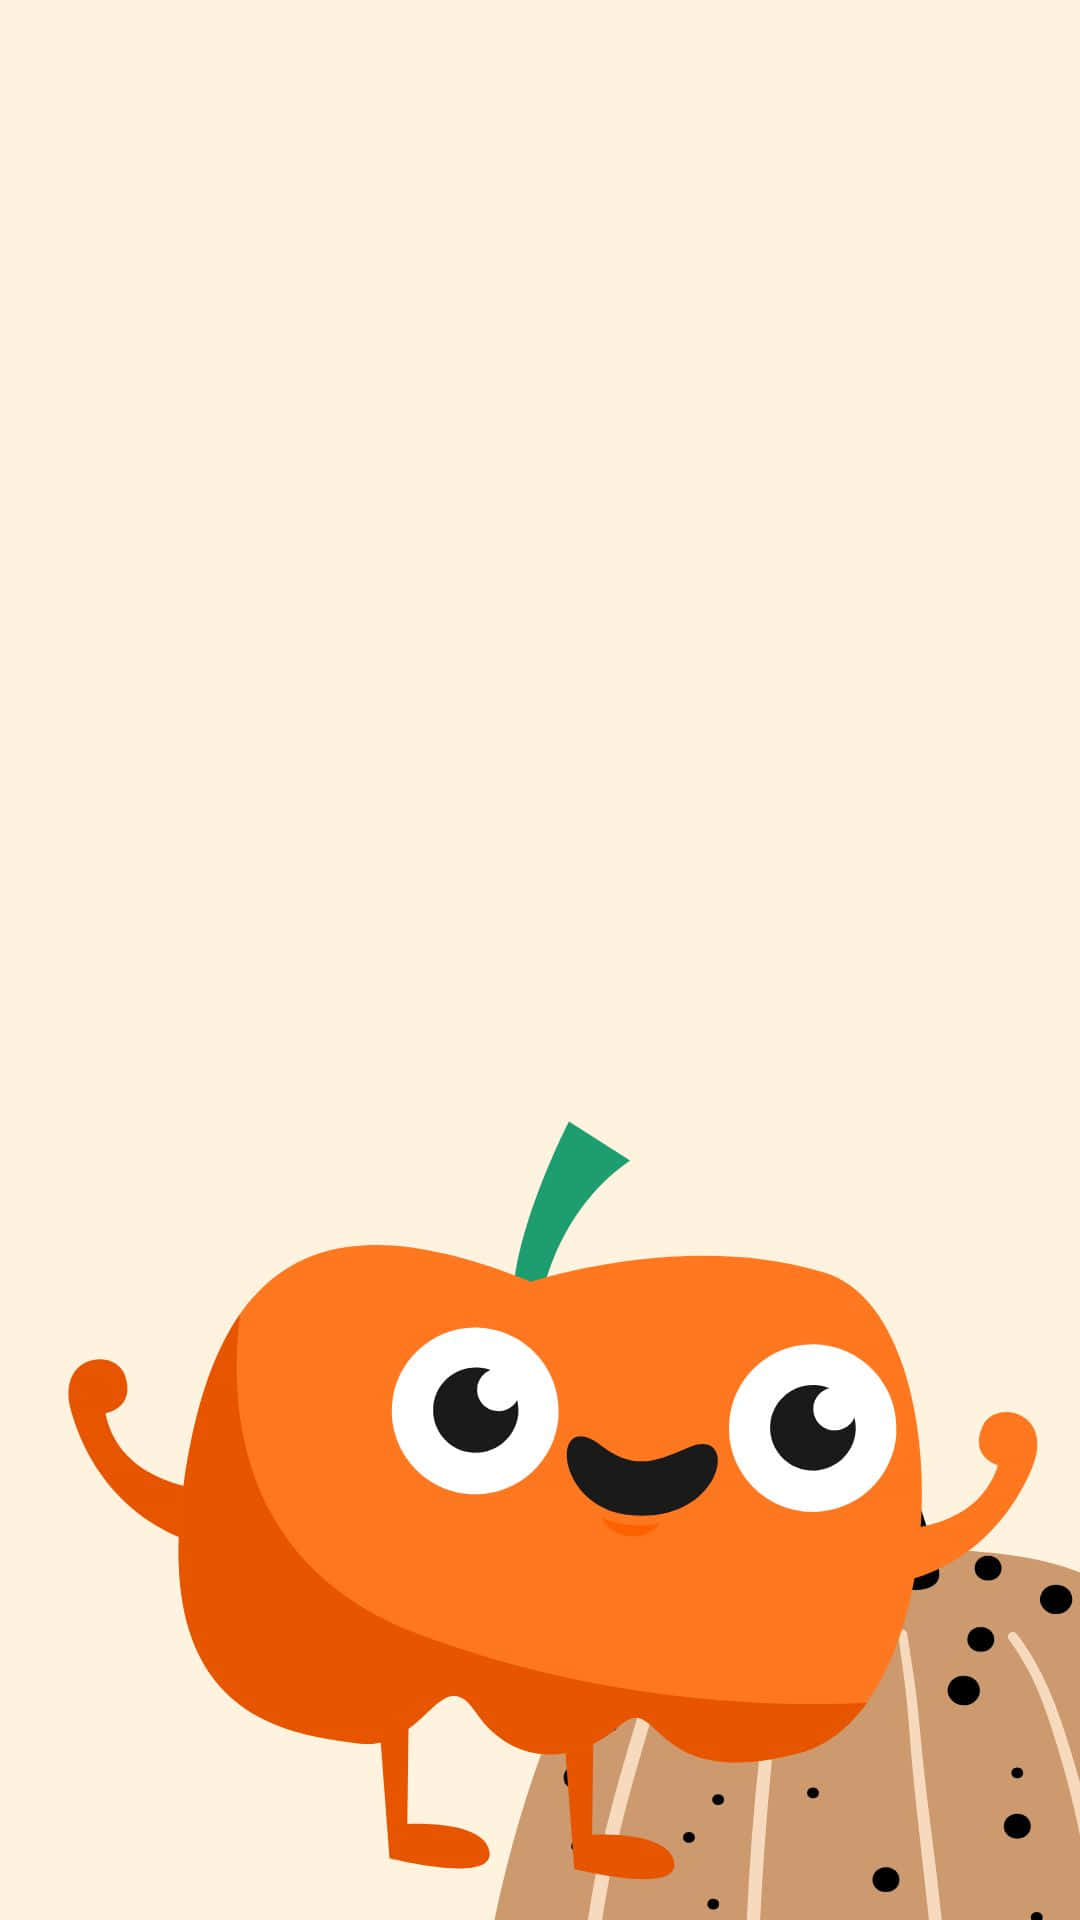 Adorable Smiling Pumpkin in a Dreamy Autumn Setting Wallpaper